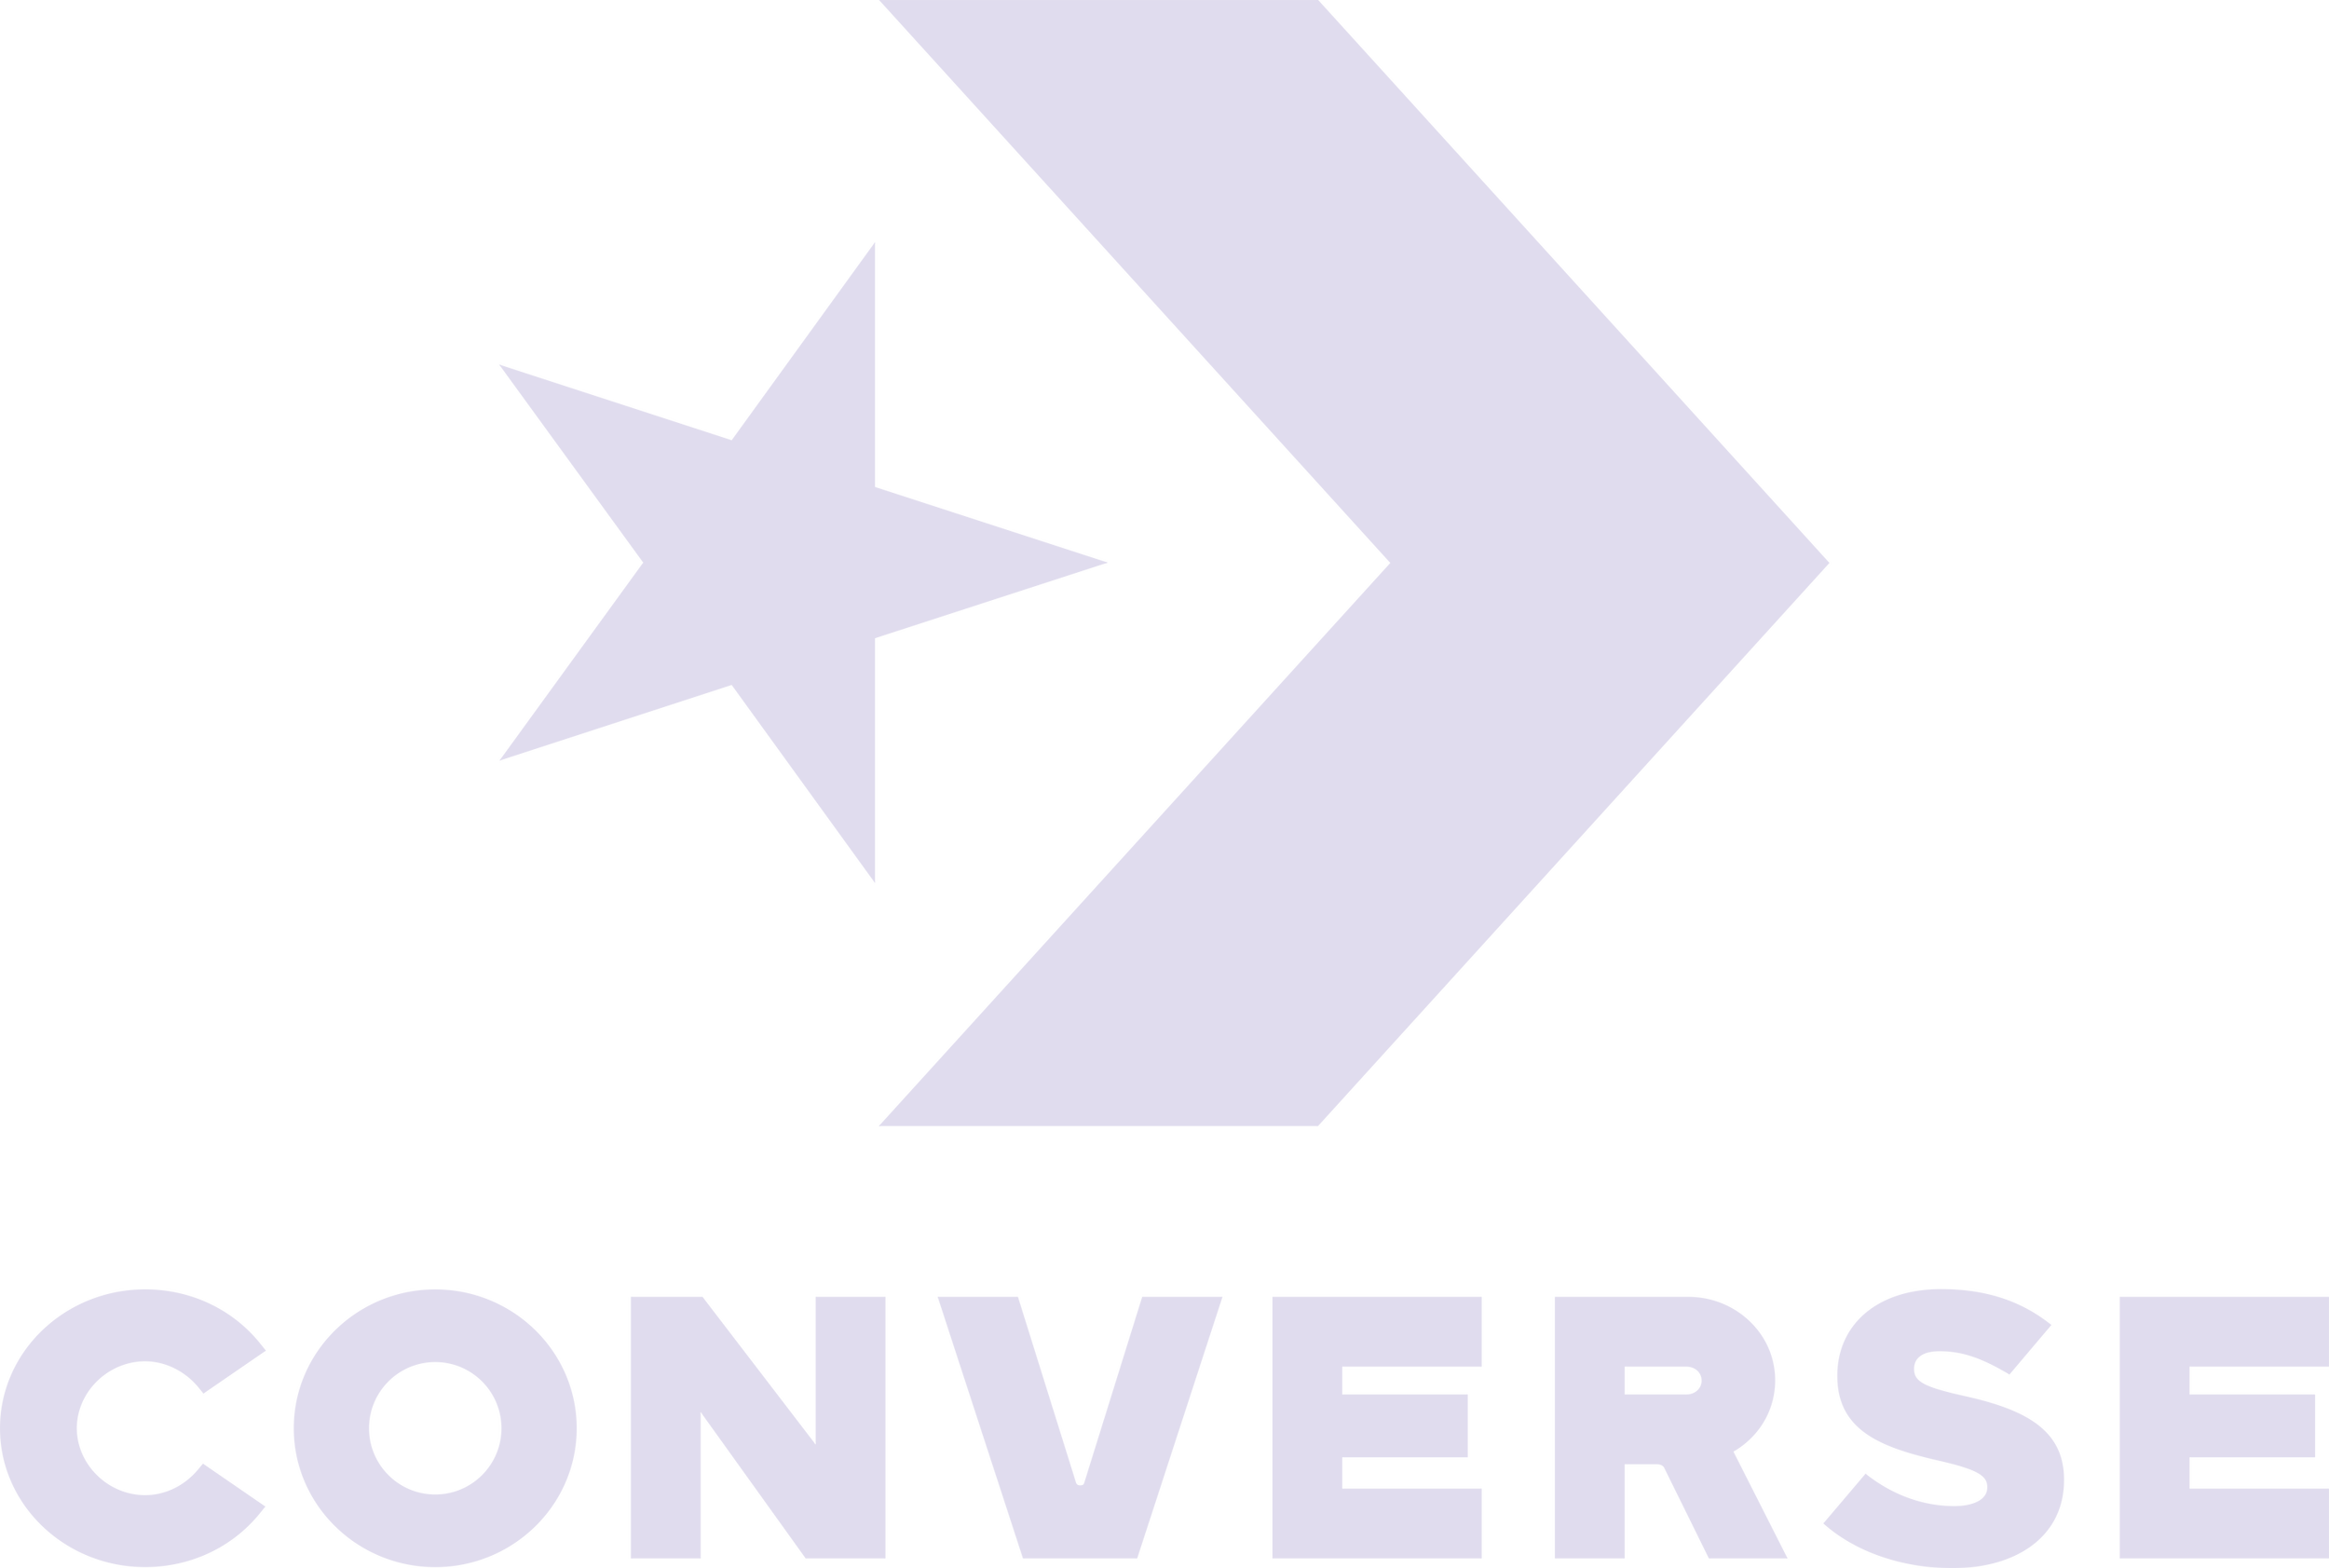 converse logos - Shakir Najieb-1.png